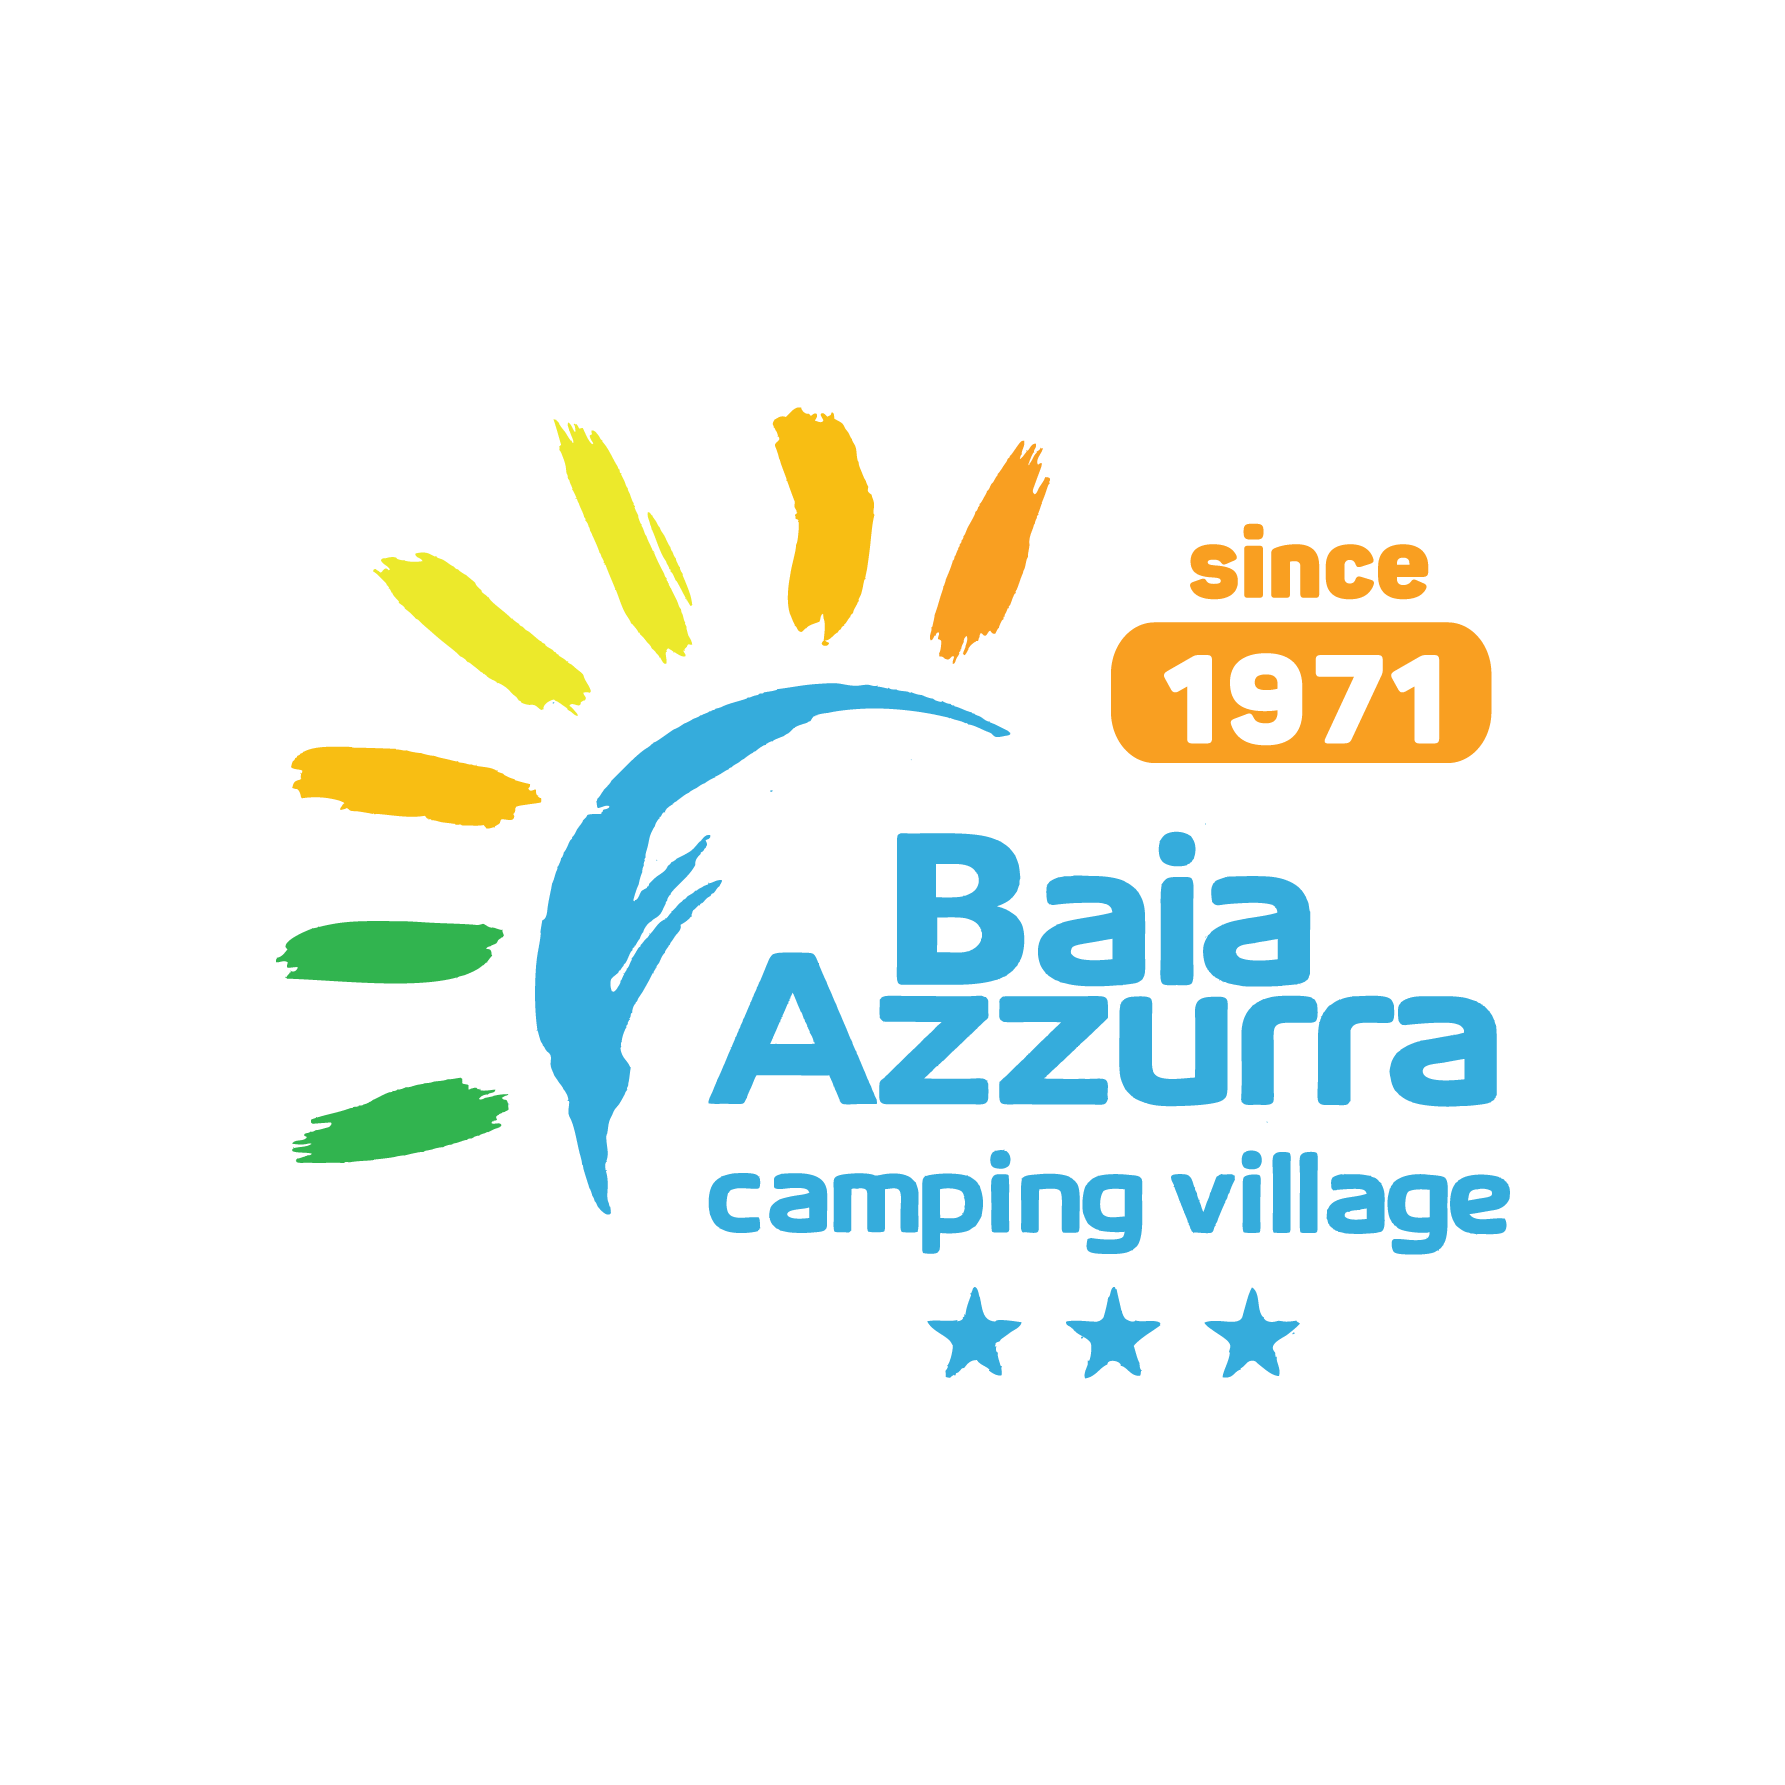 Camping Village Baia Azzurra